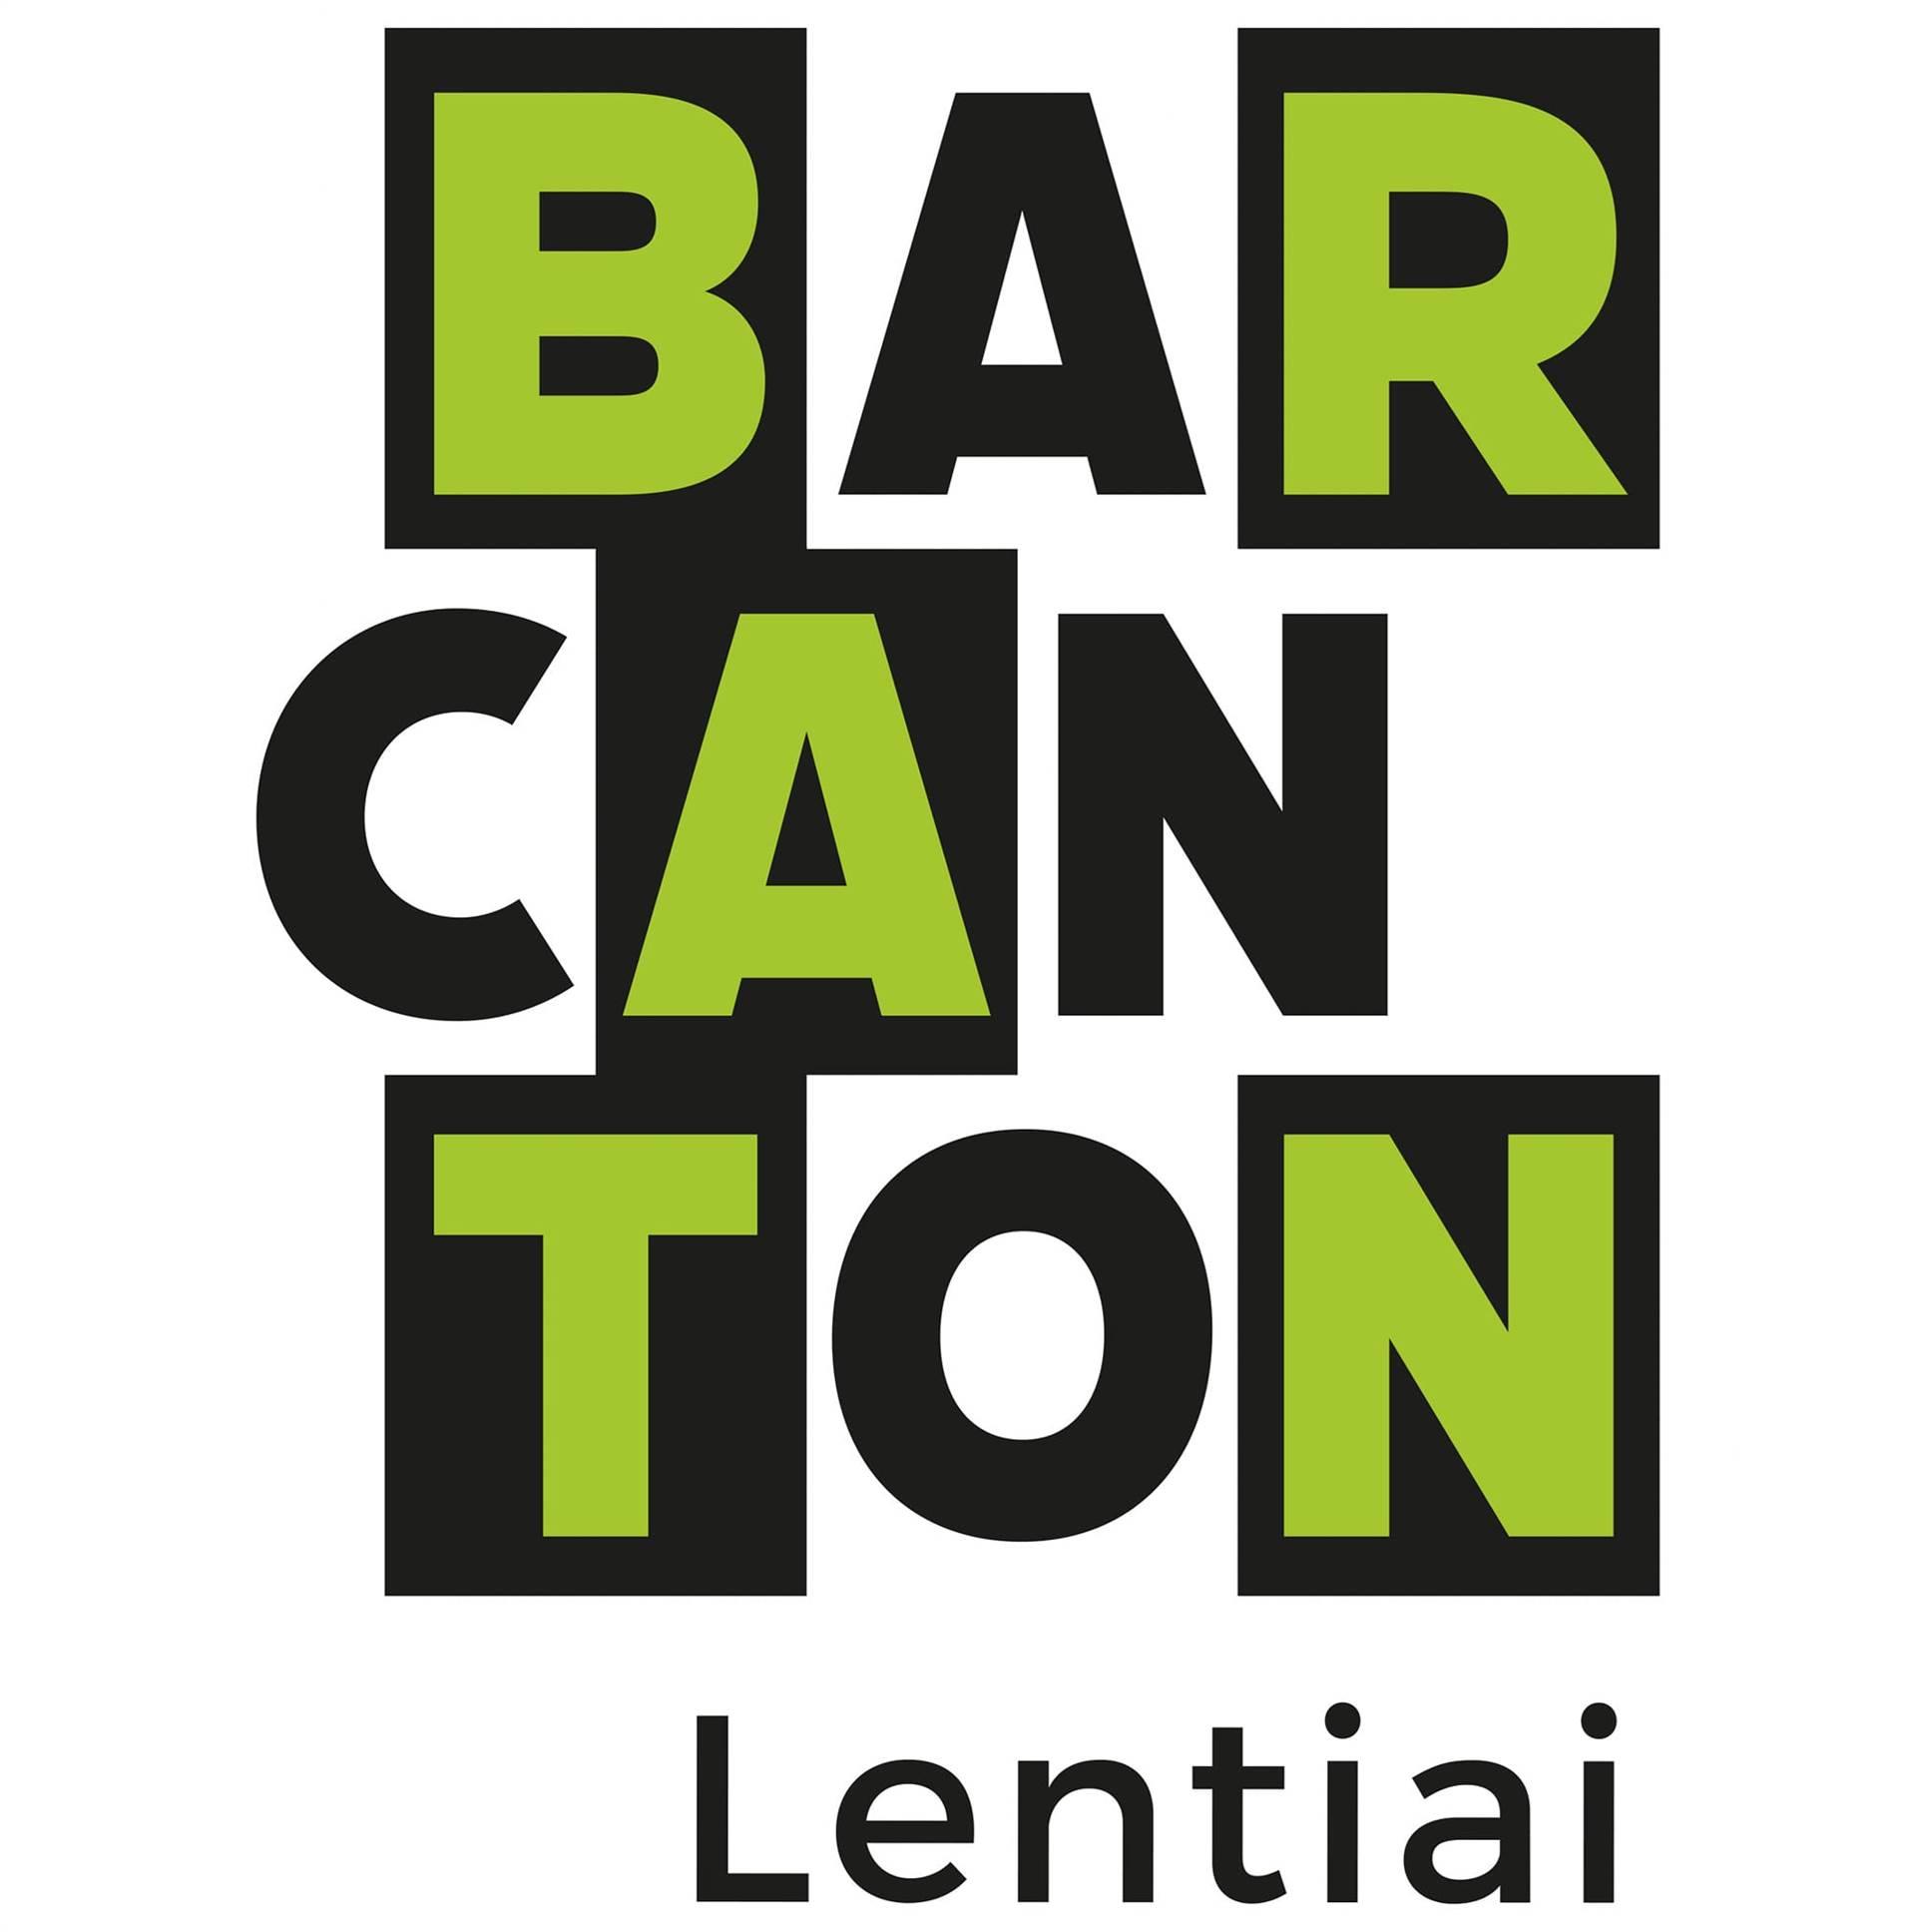 Bar Canton